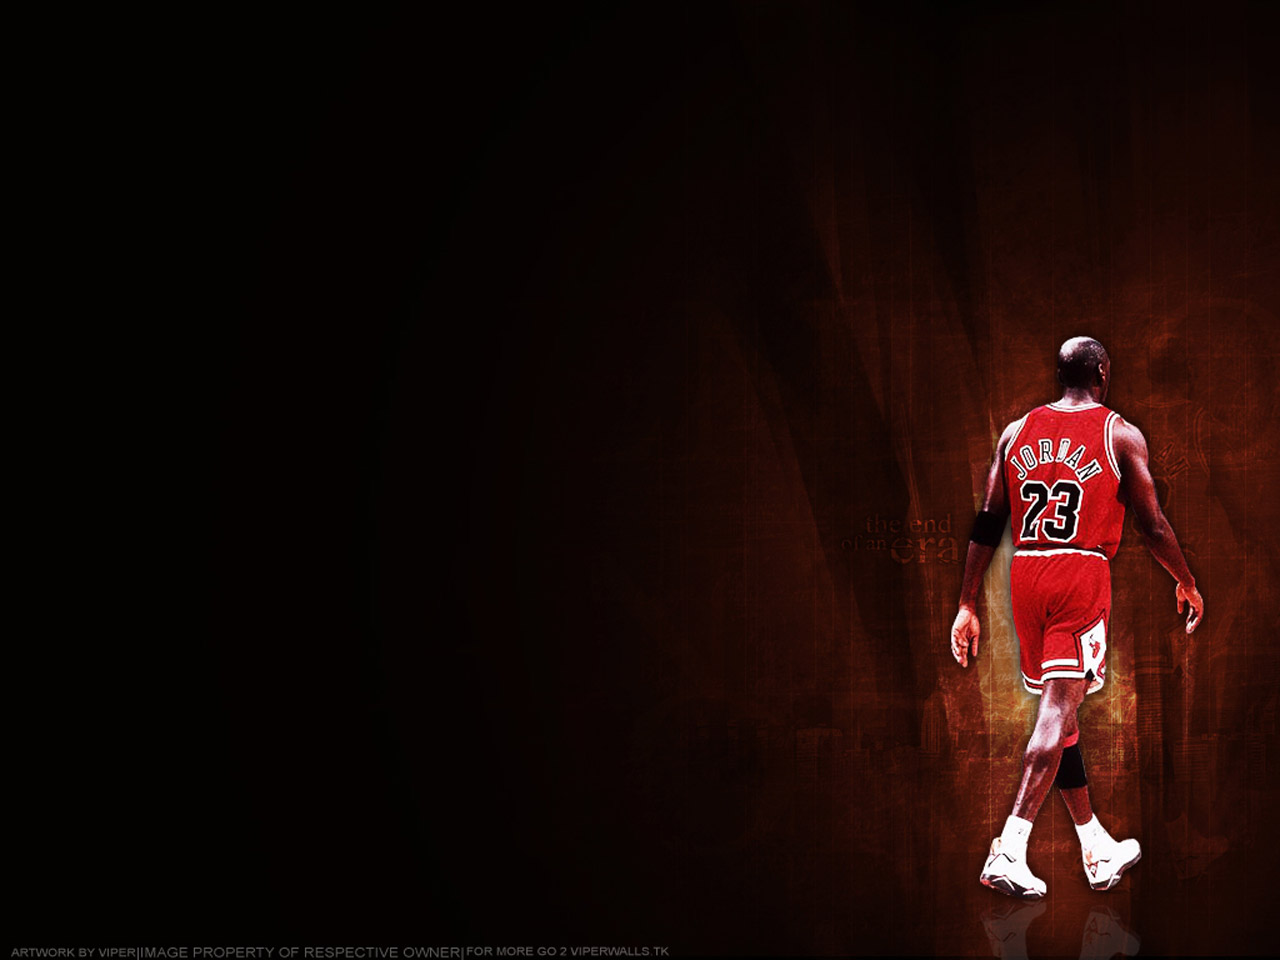 Michael Jordan Wallpaper Big Fan of NBA   Daily Update